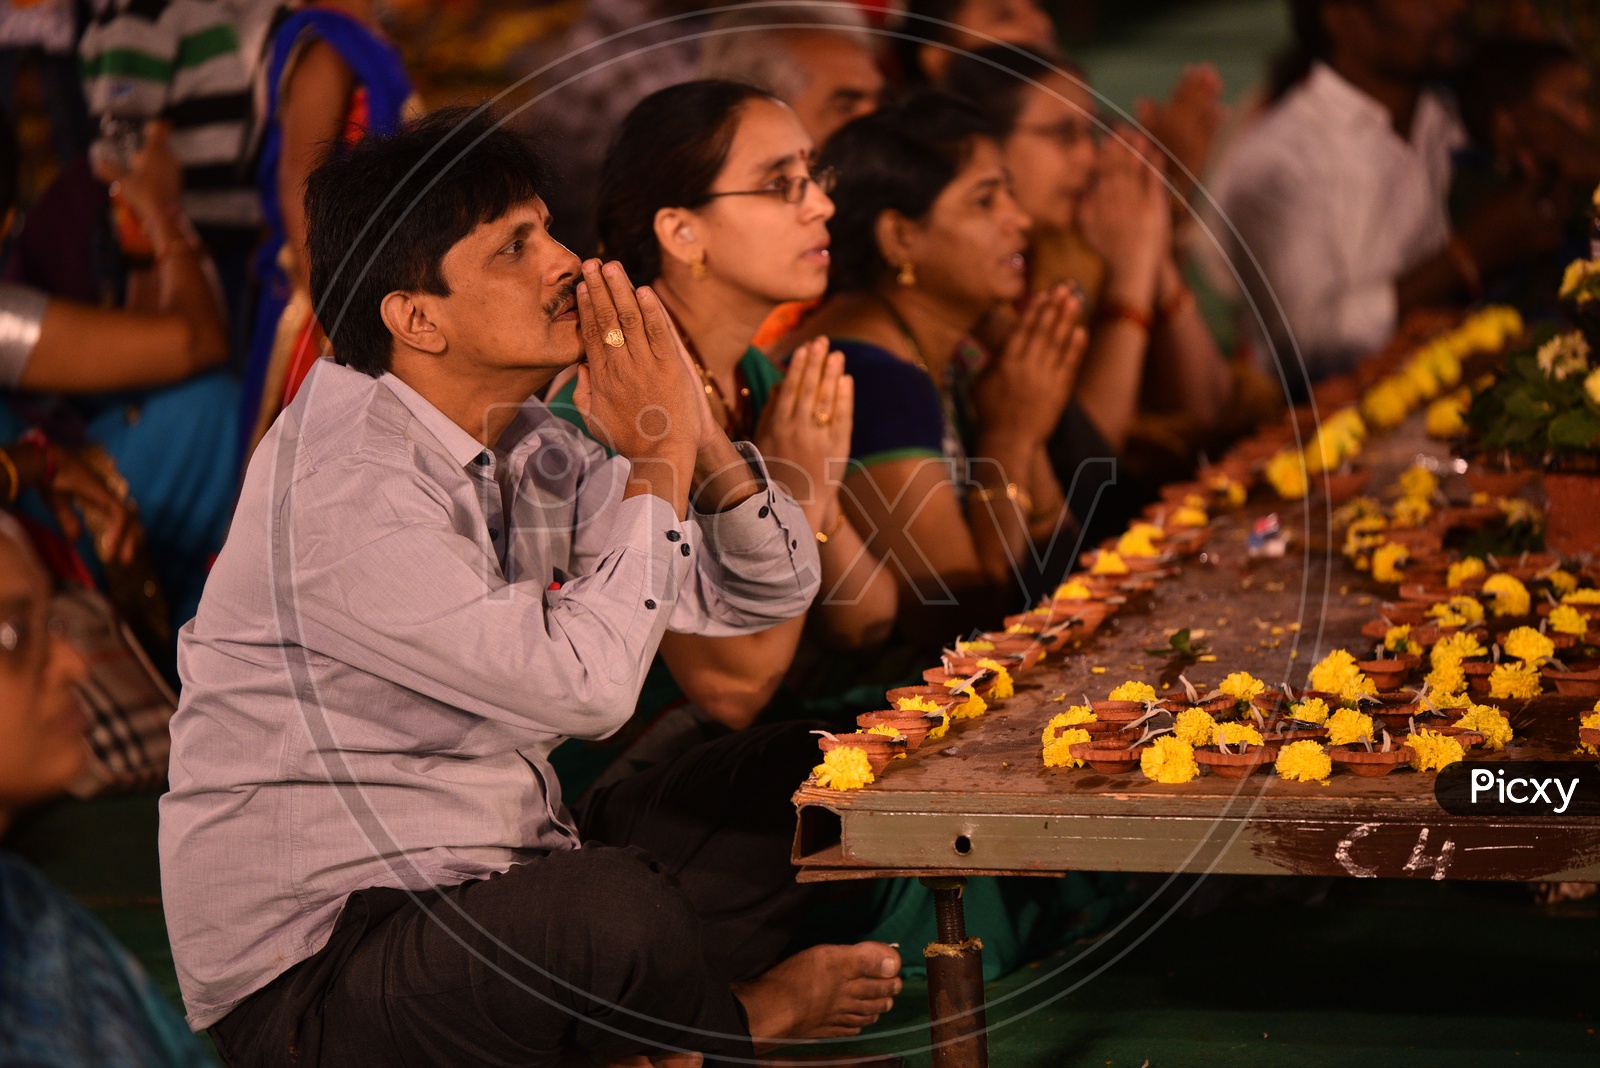 Hindu Devotees Praying